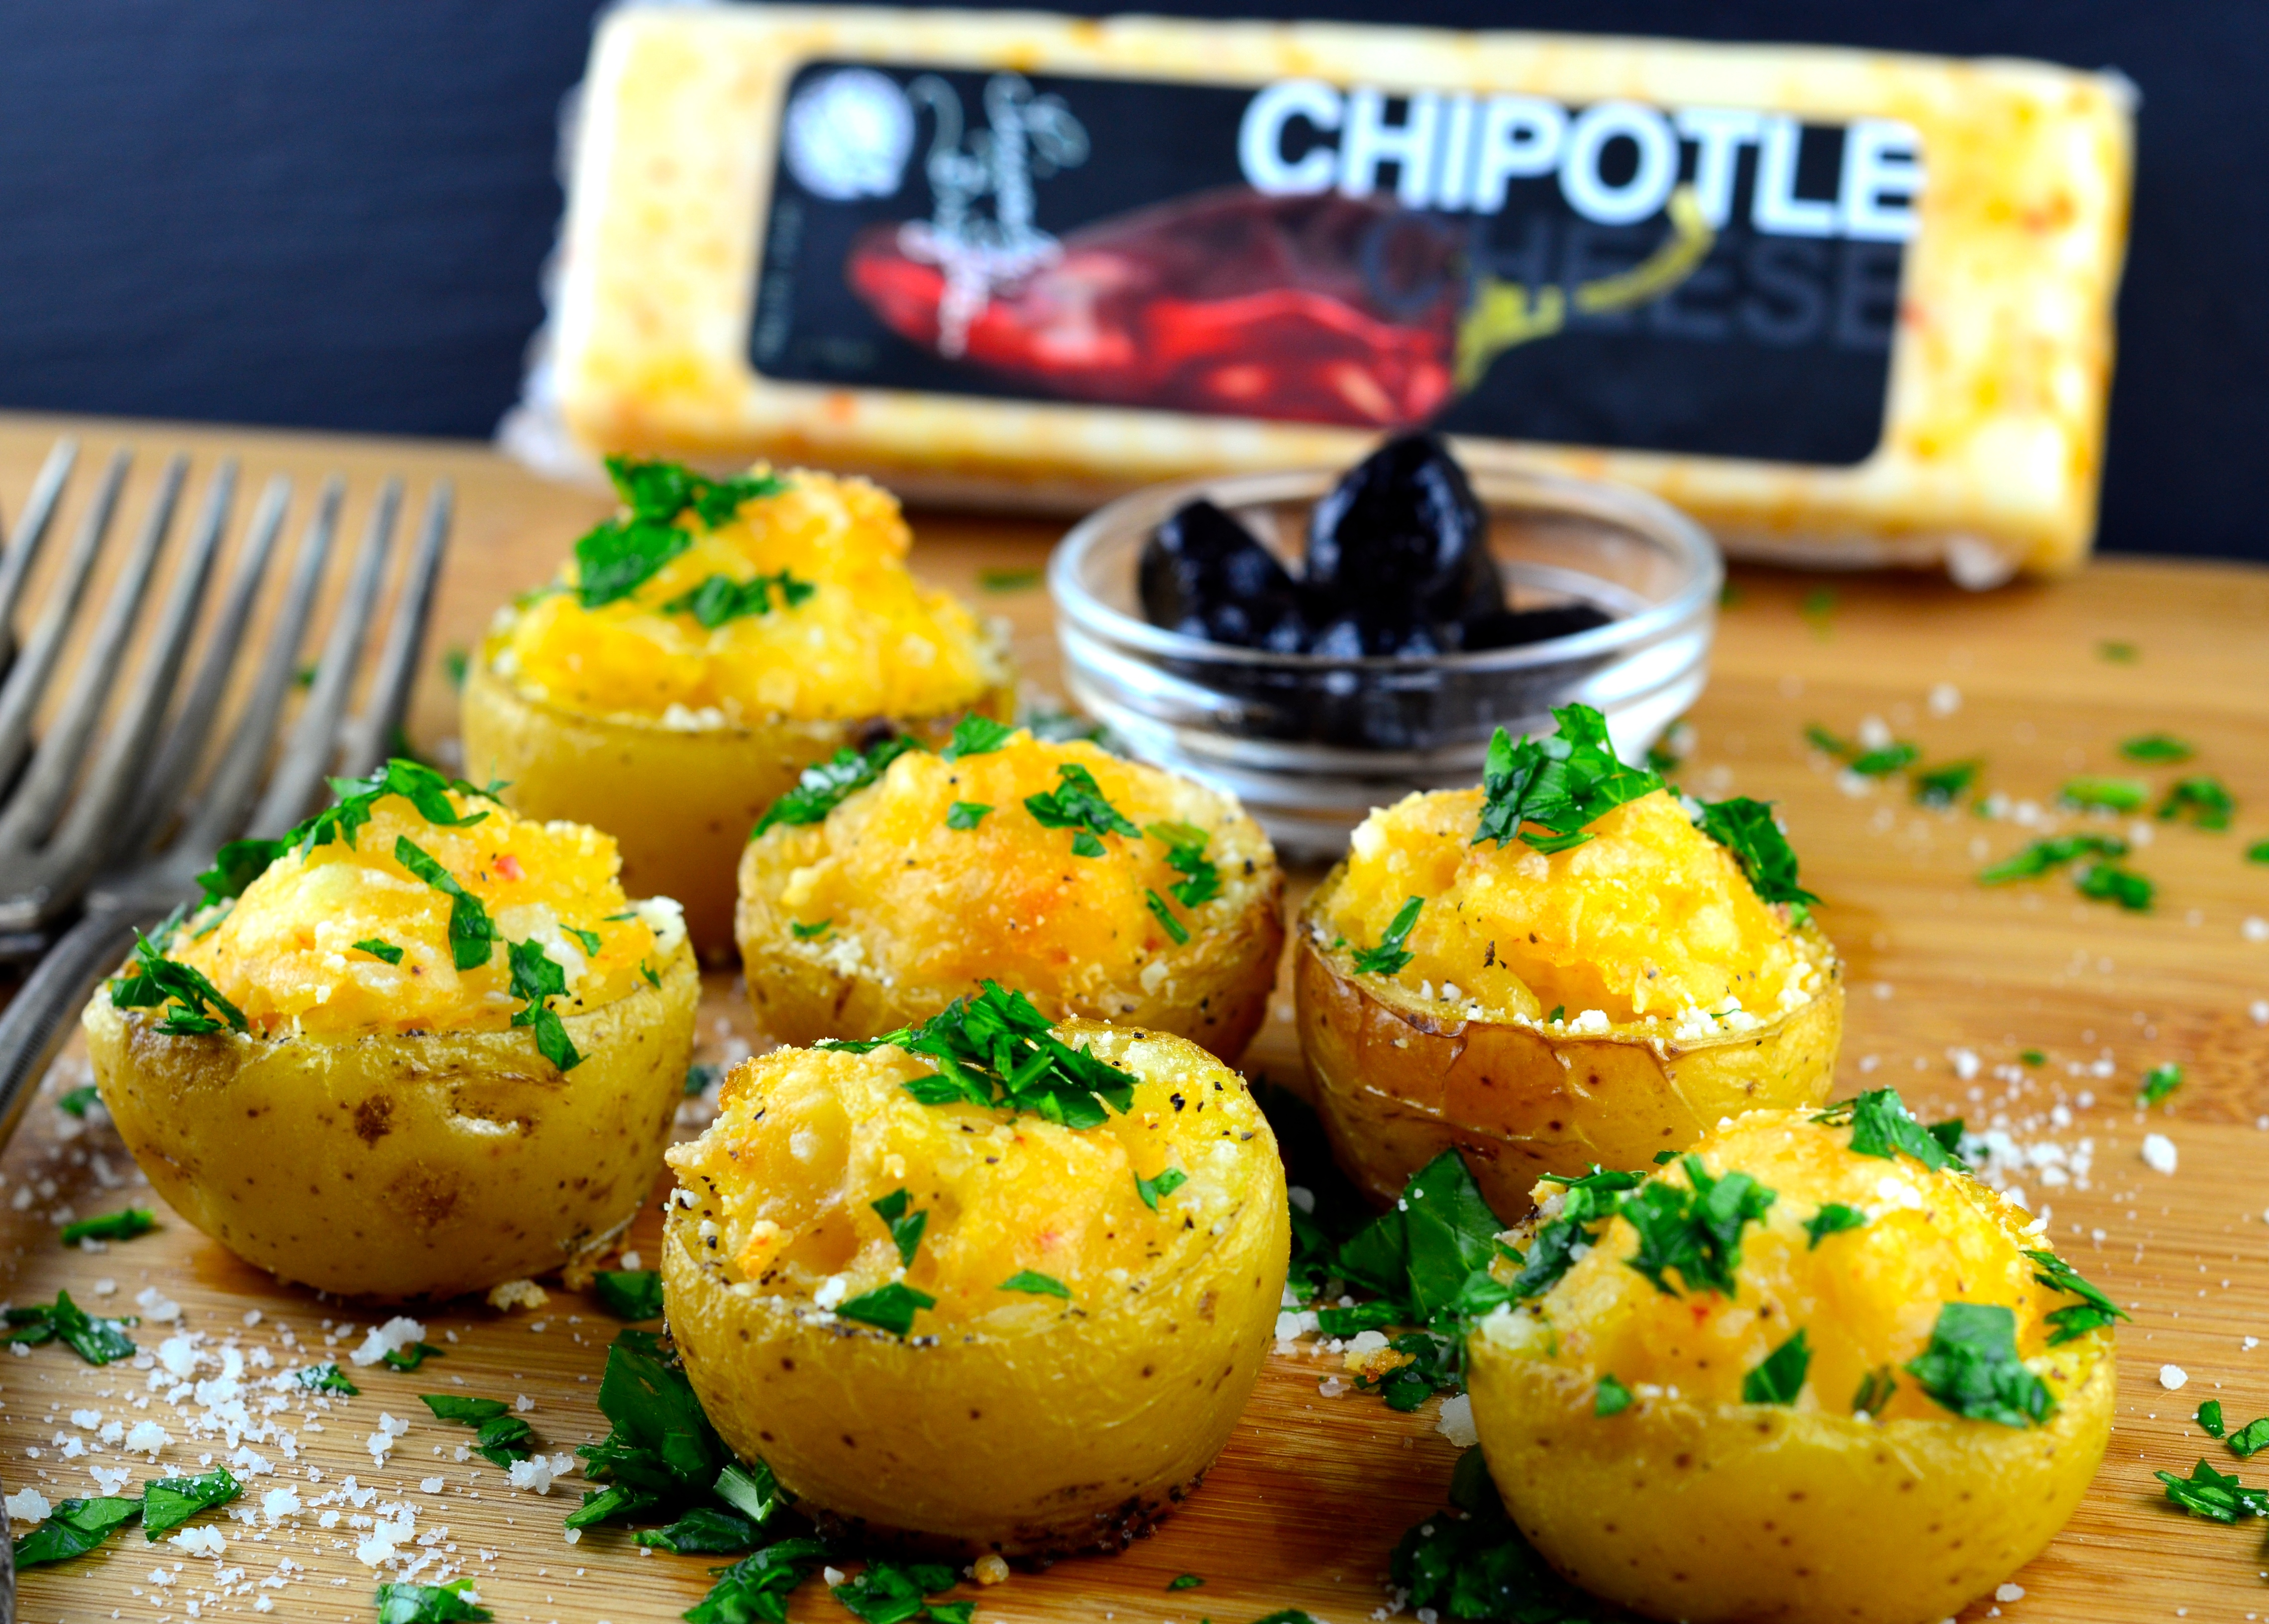 Bite size cheese stuffed potatoes - #cheese #potato #chipotle #appetizer #superbowl #vegetarian #glutenFree #Super Bowl